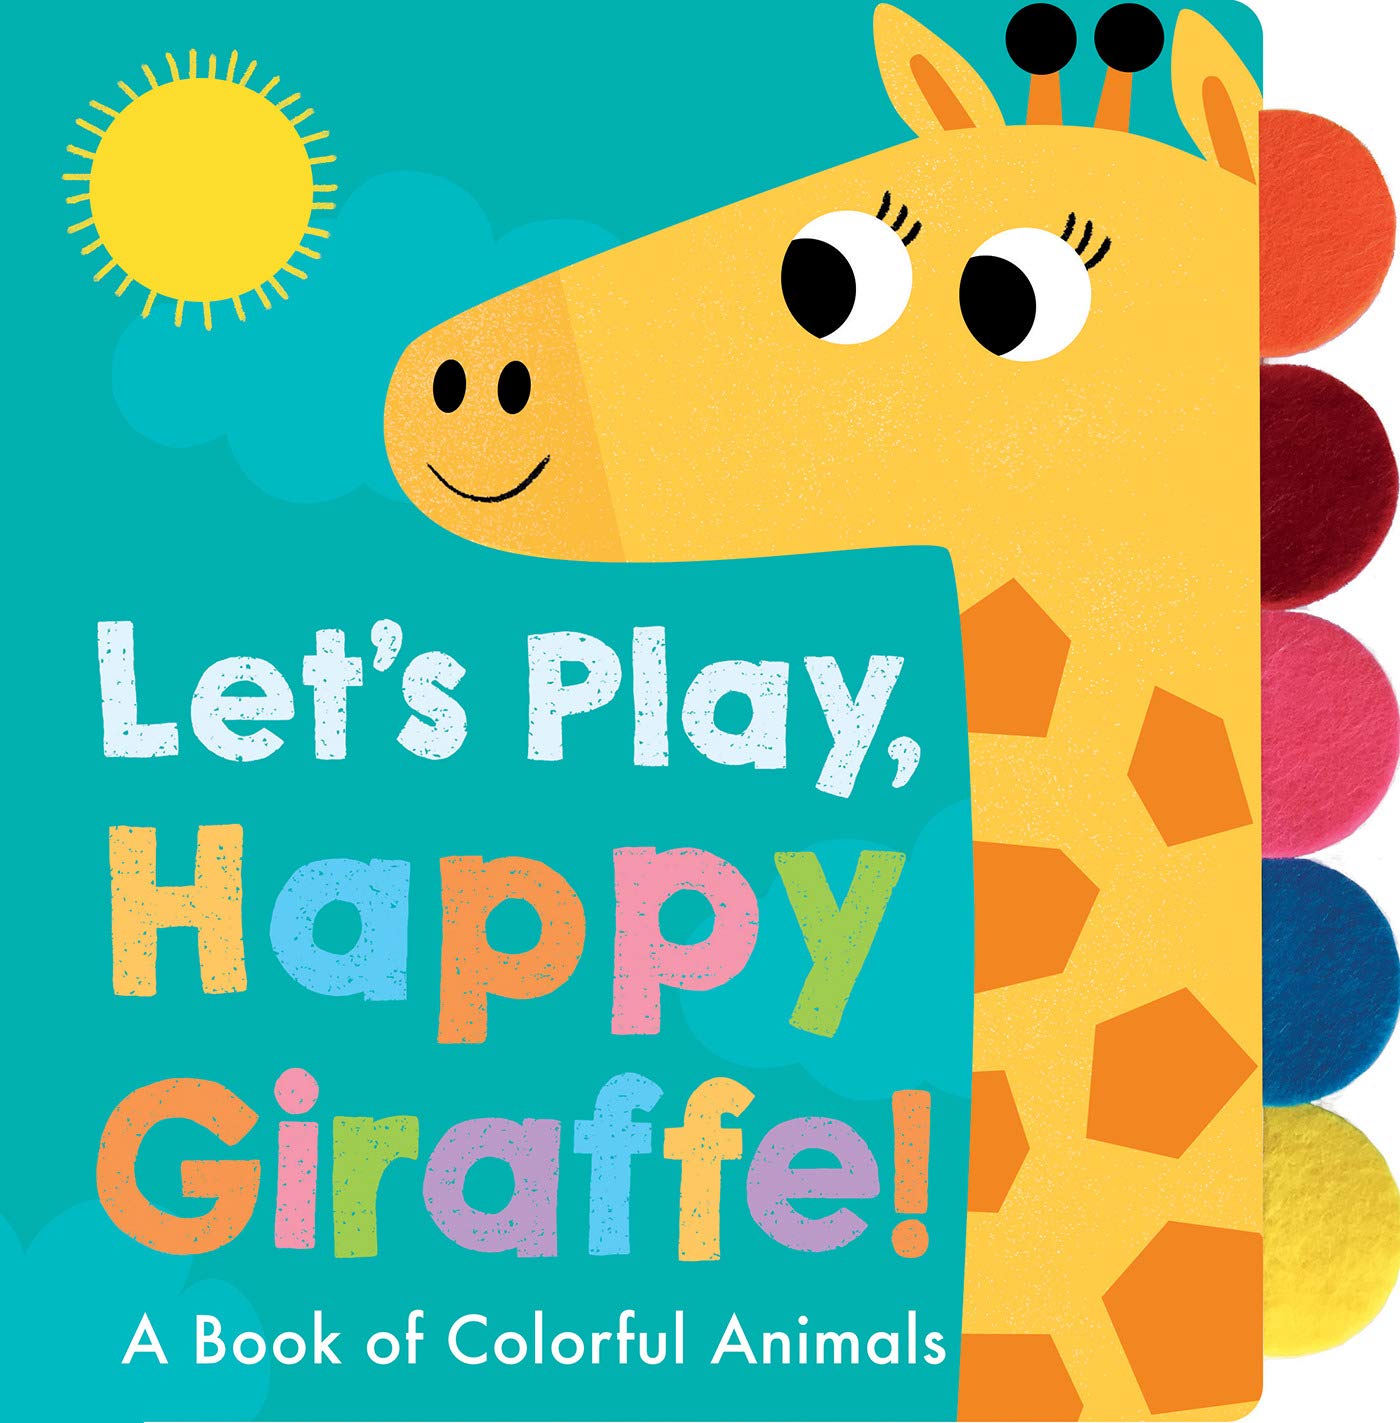 Let's Play, Happy Giraffe!